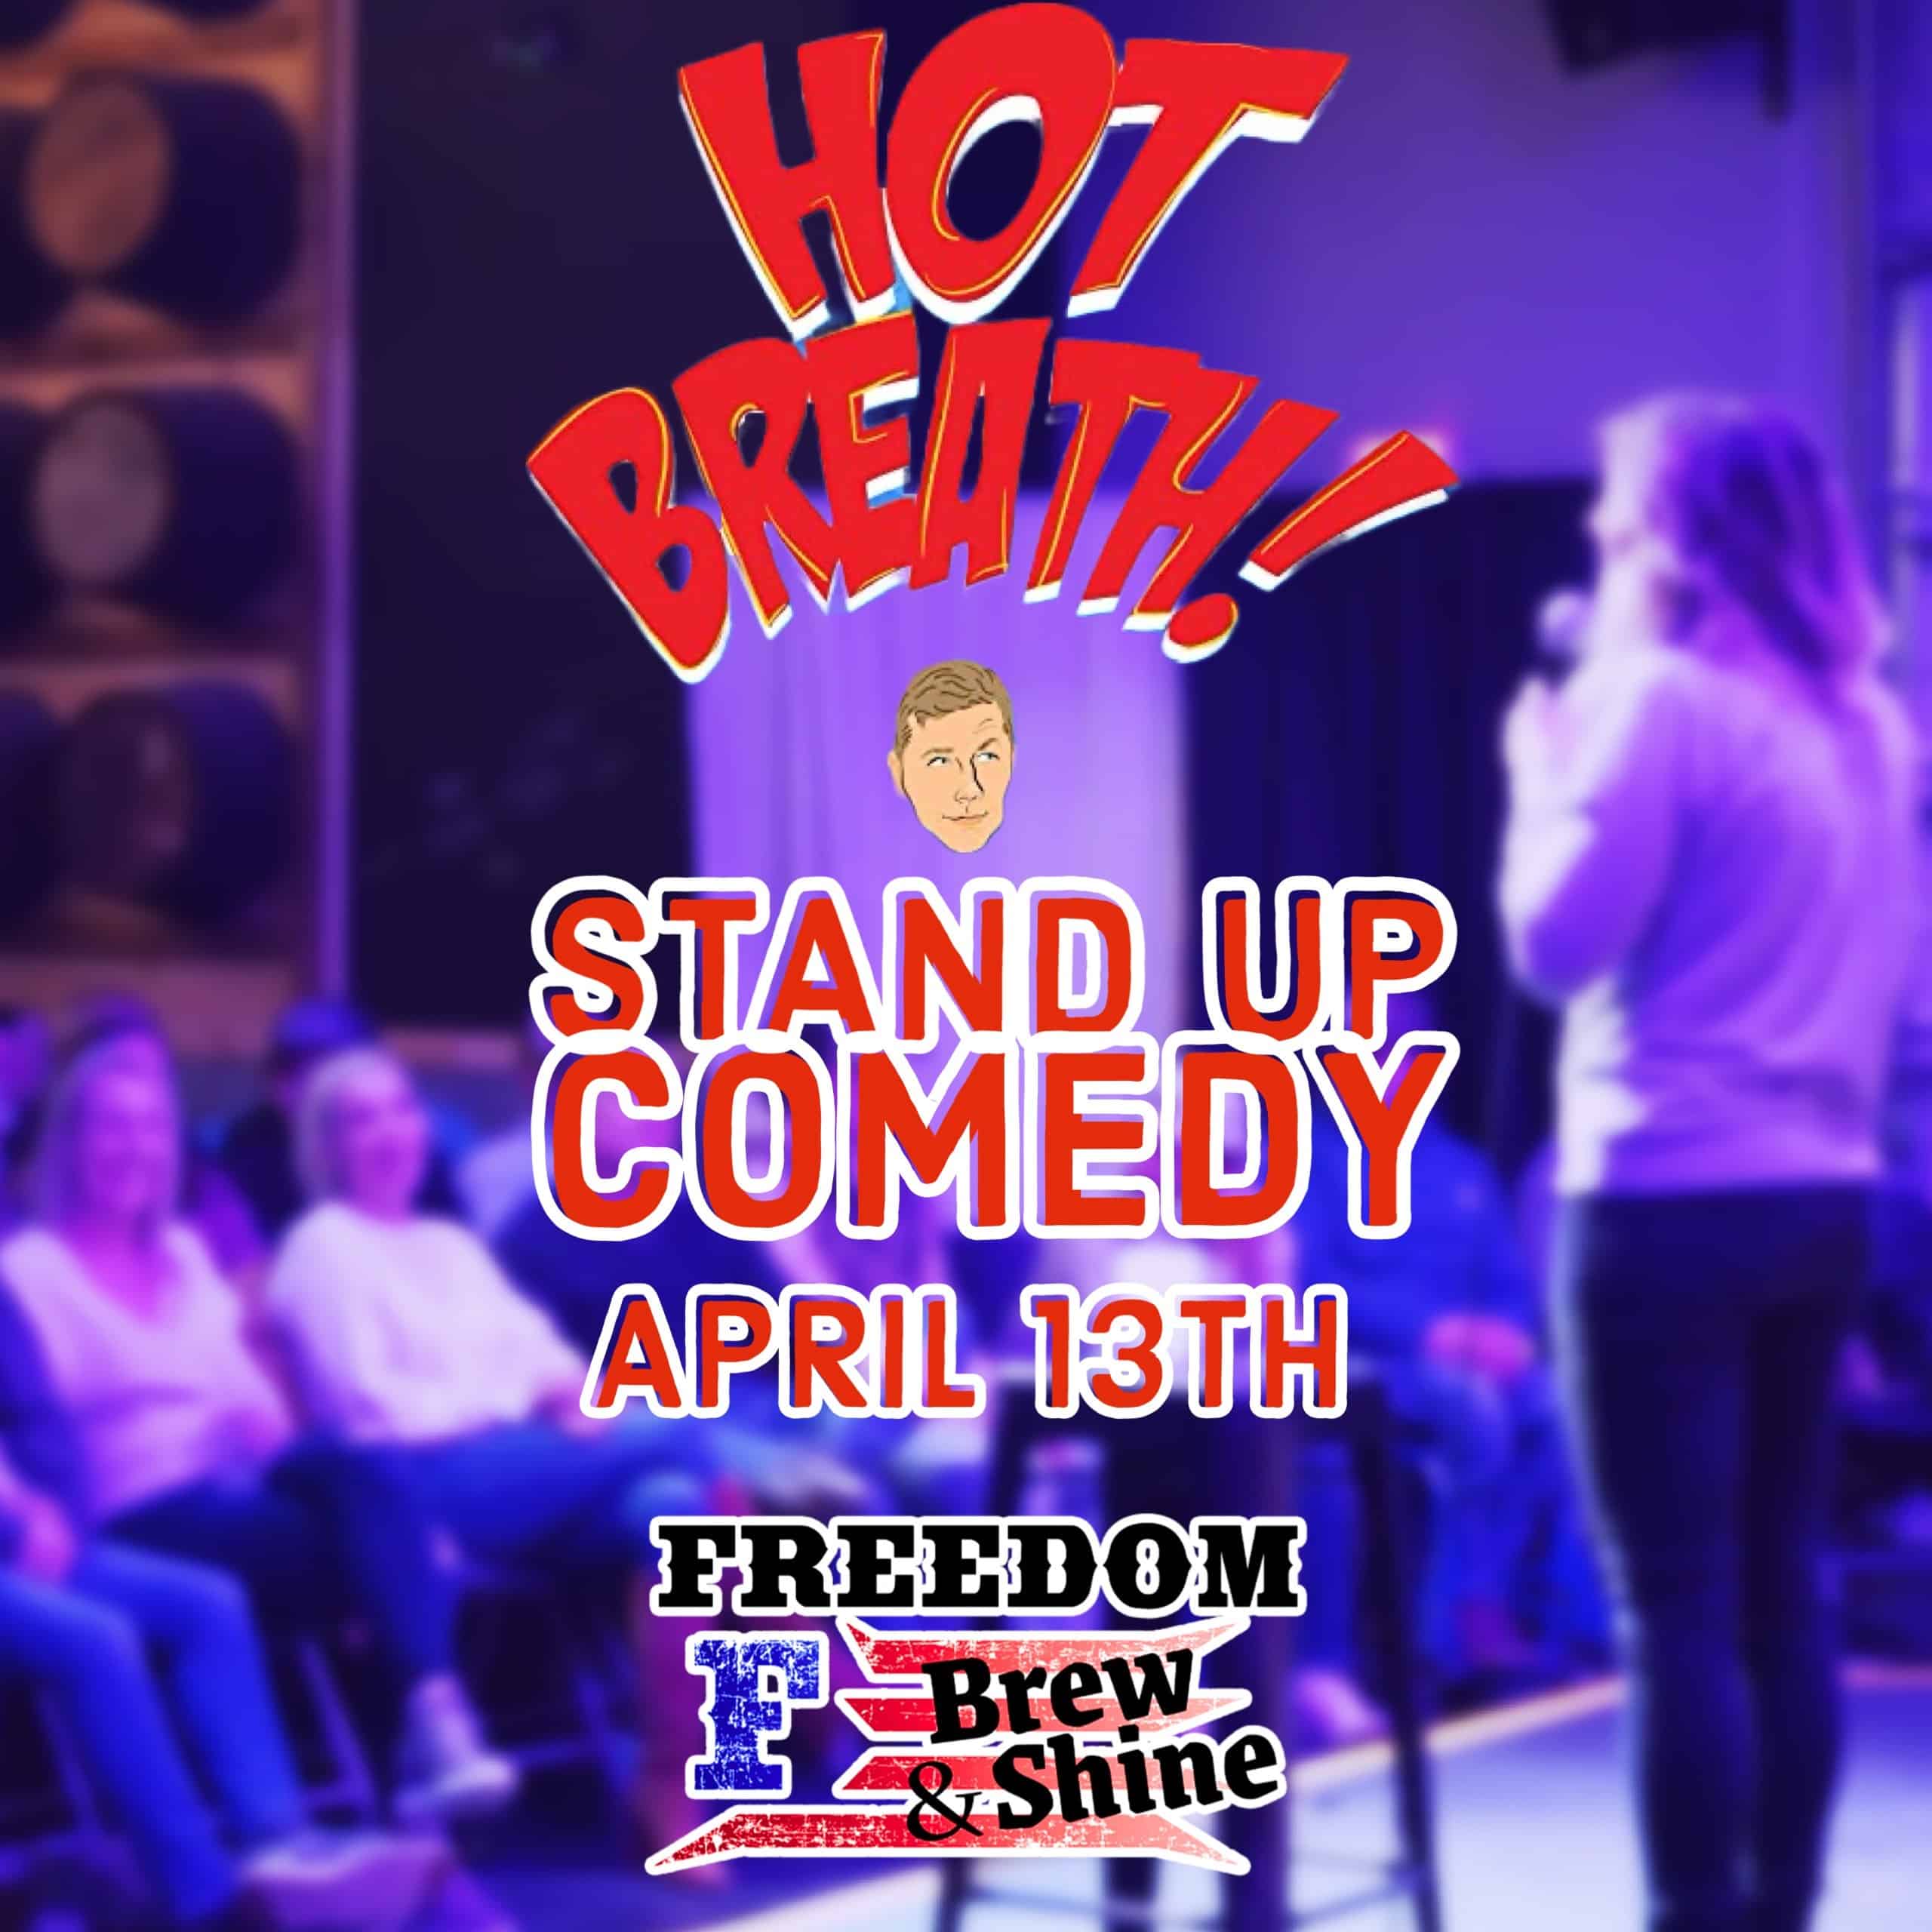 Hot Breath Comedy Showcase @ Freedom Brew & Shine